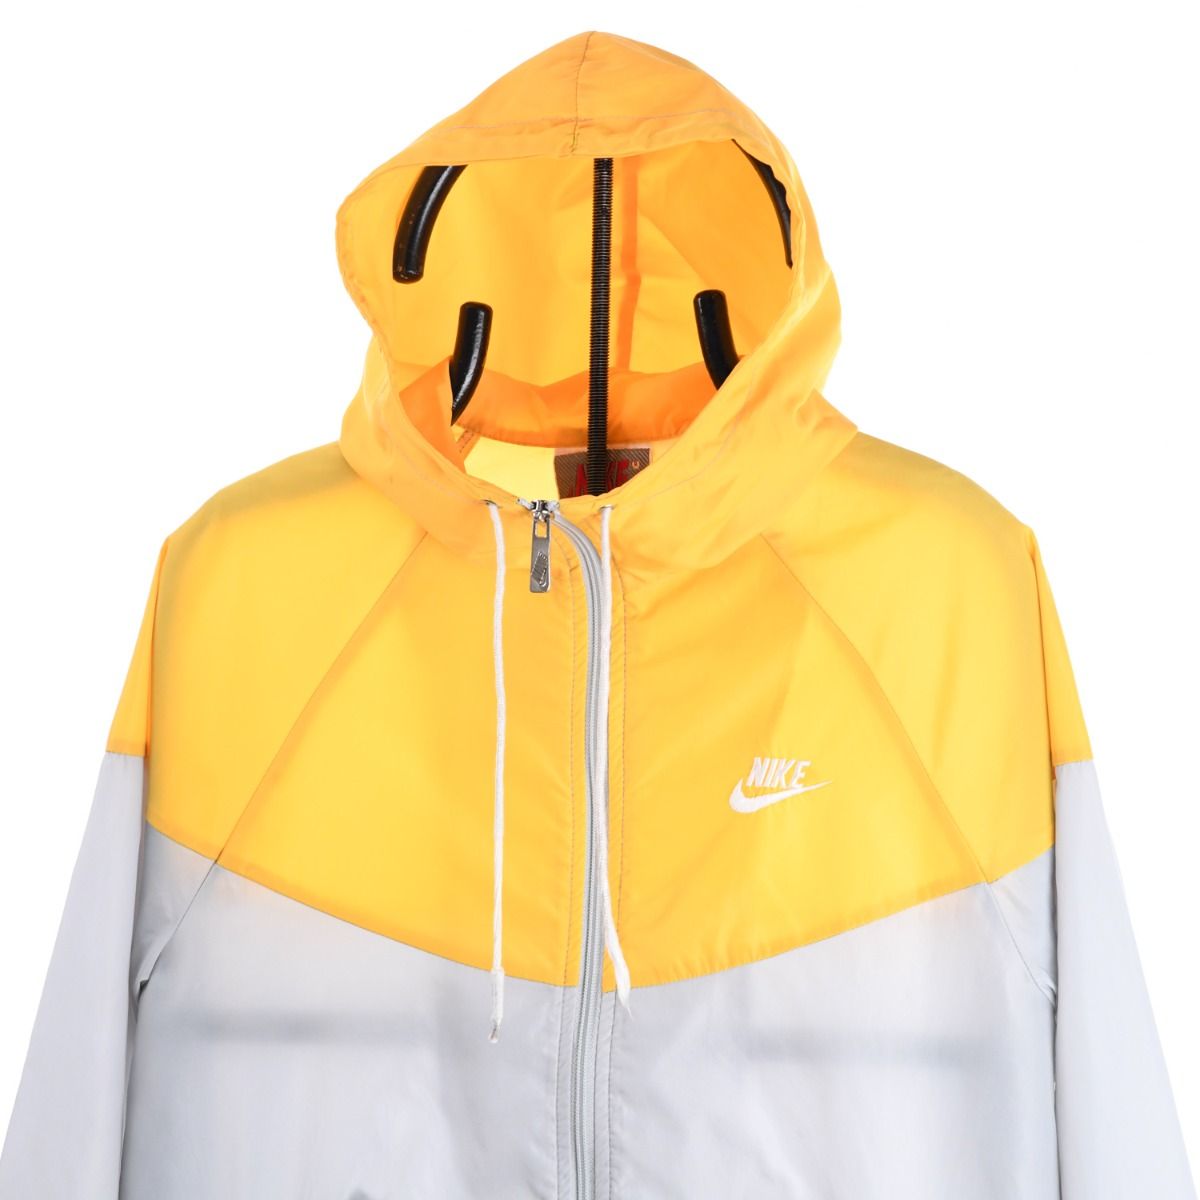 Nike Early 1990s Yellow Shell Jacket